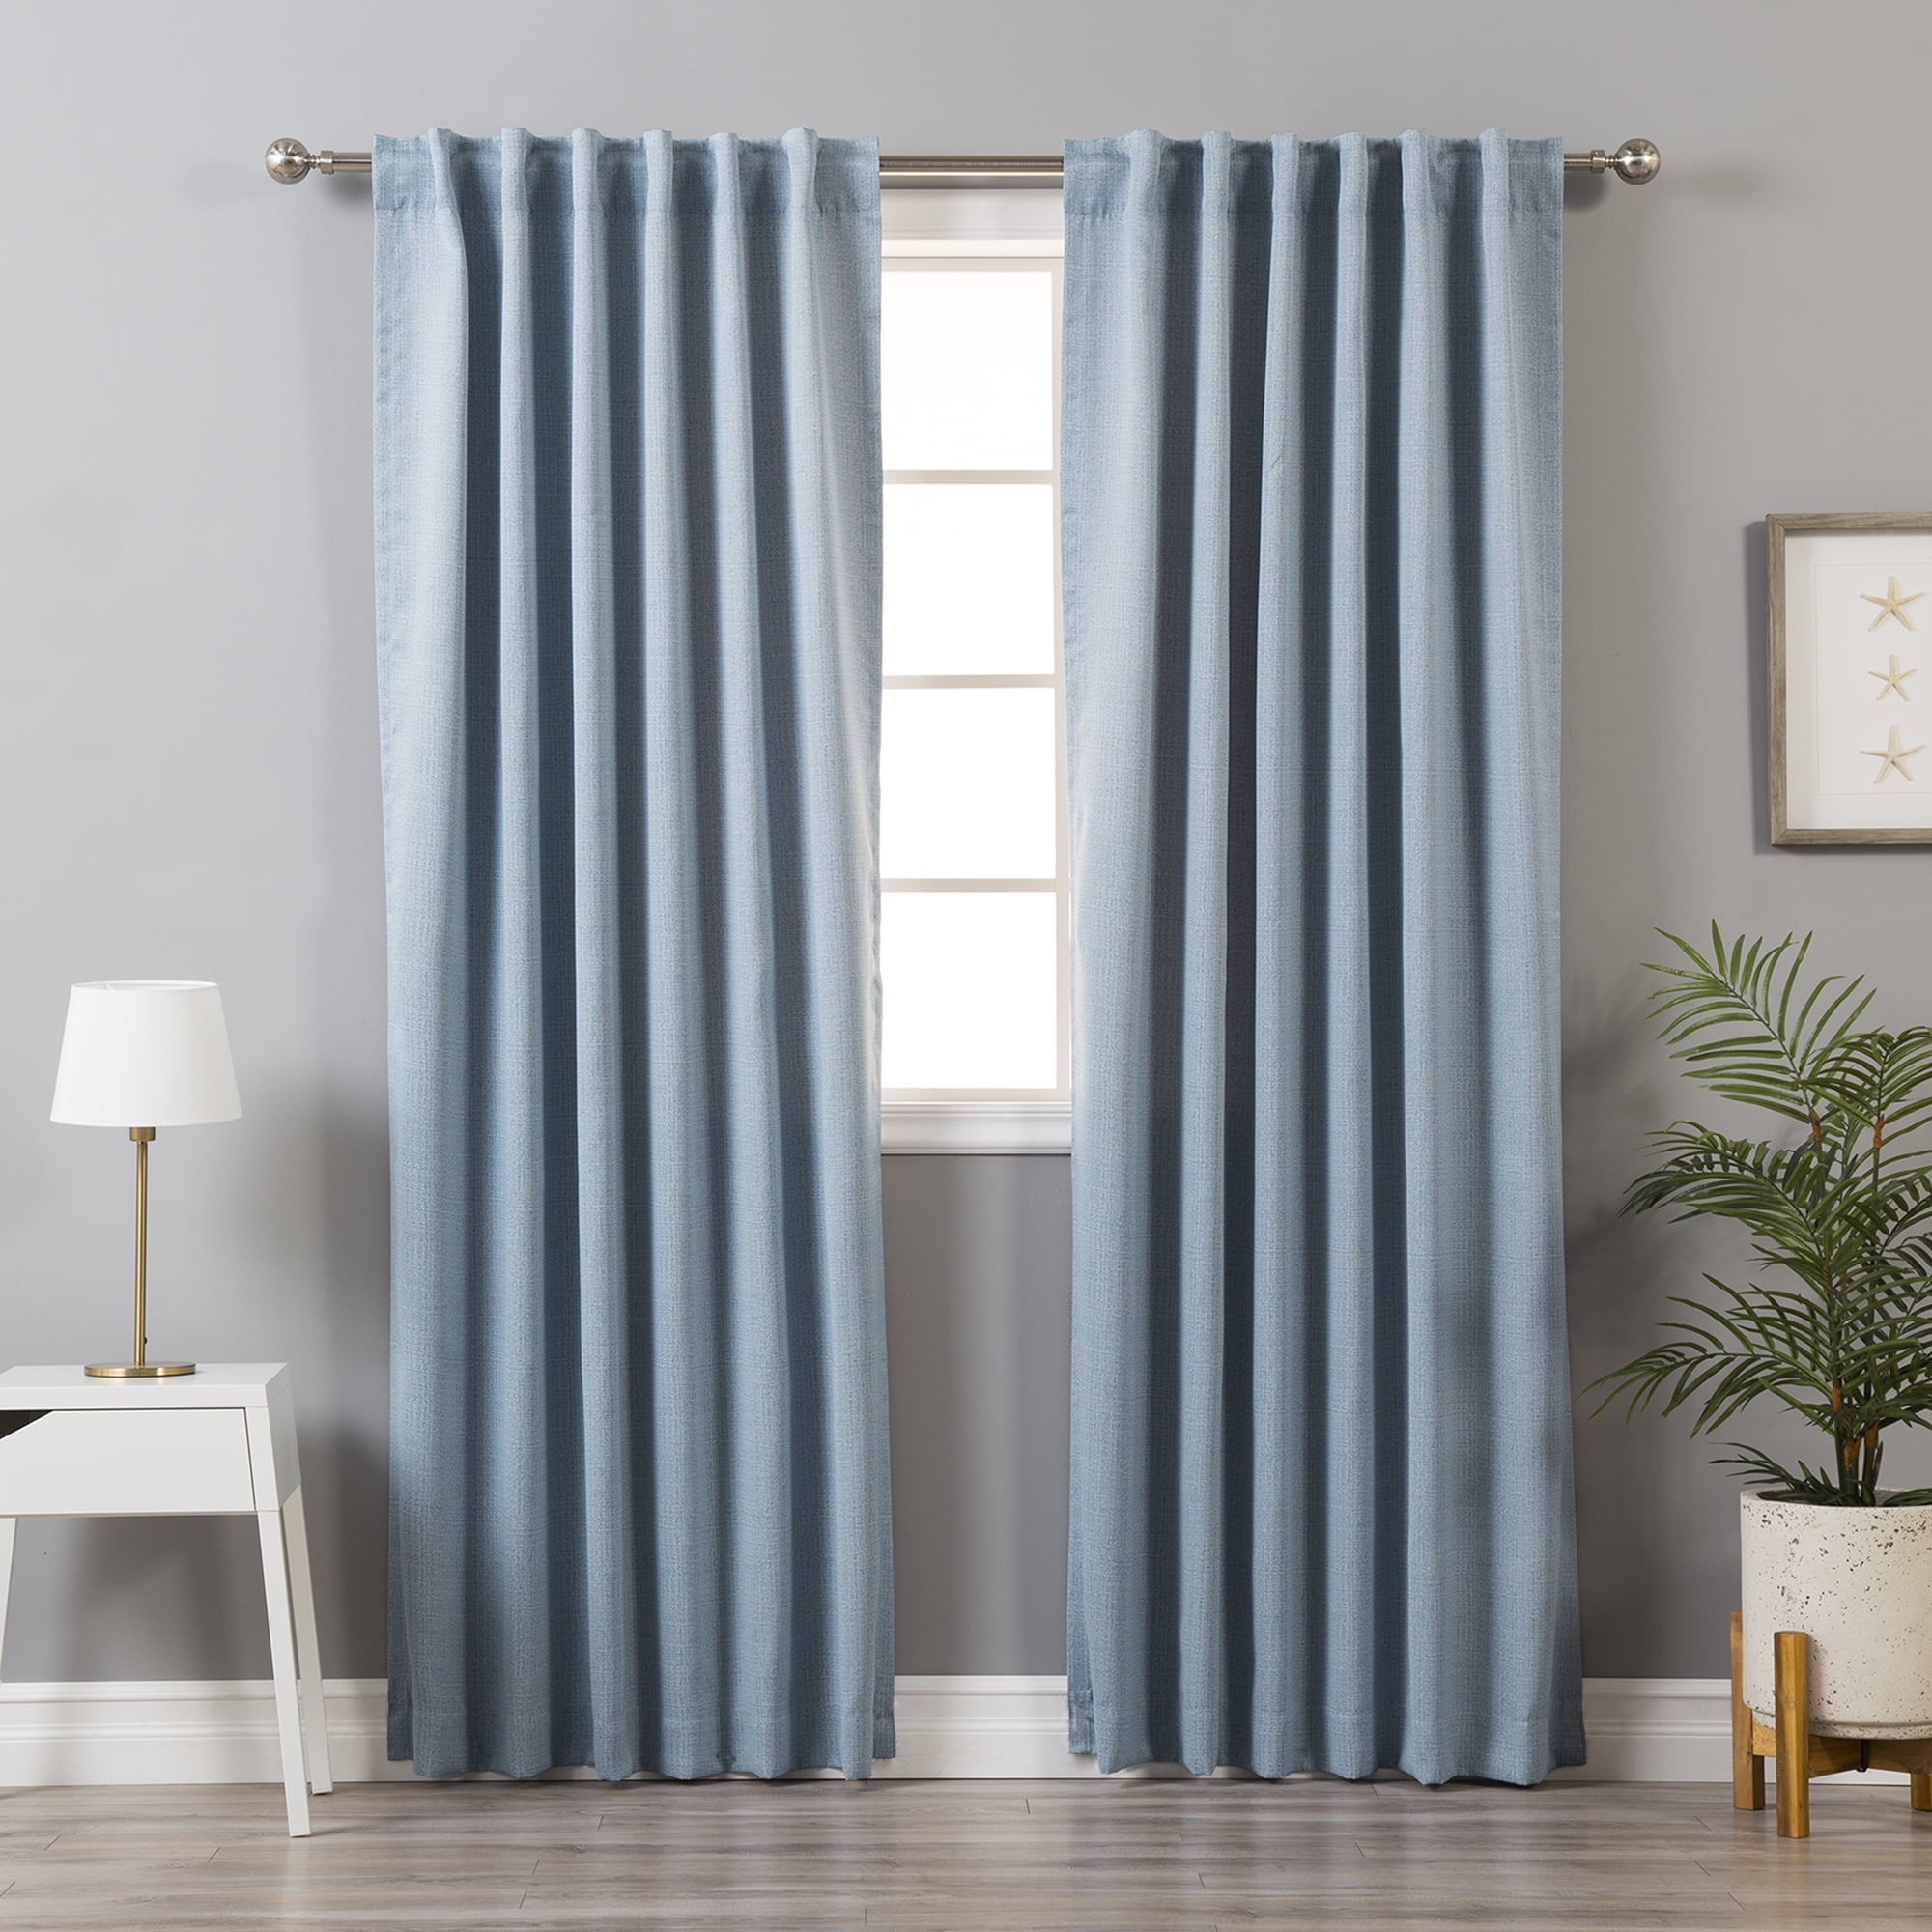 Quality Home Linen Print Room Darkening Curtains - Blue ...